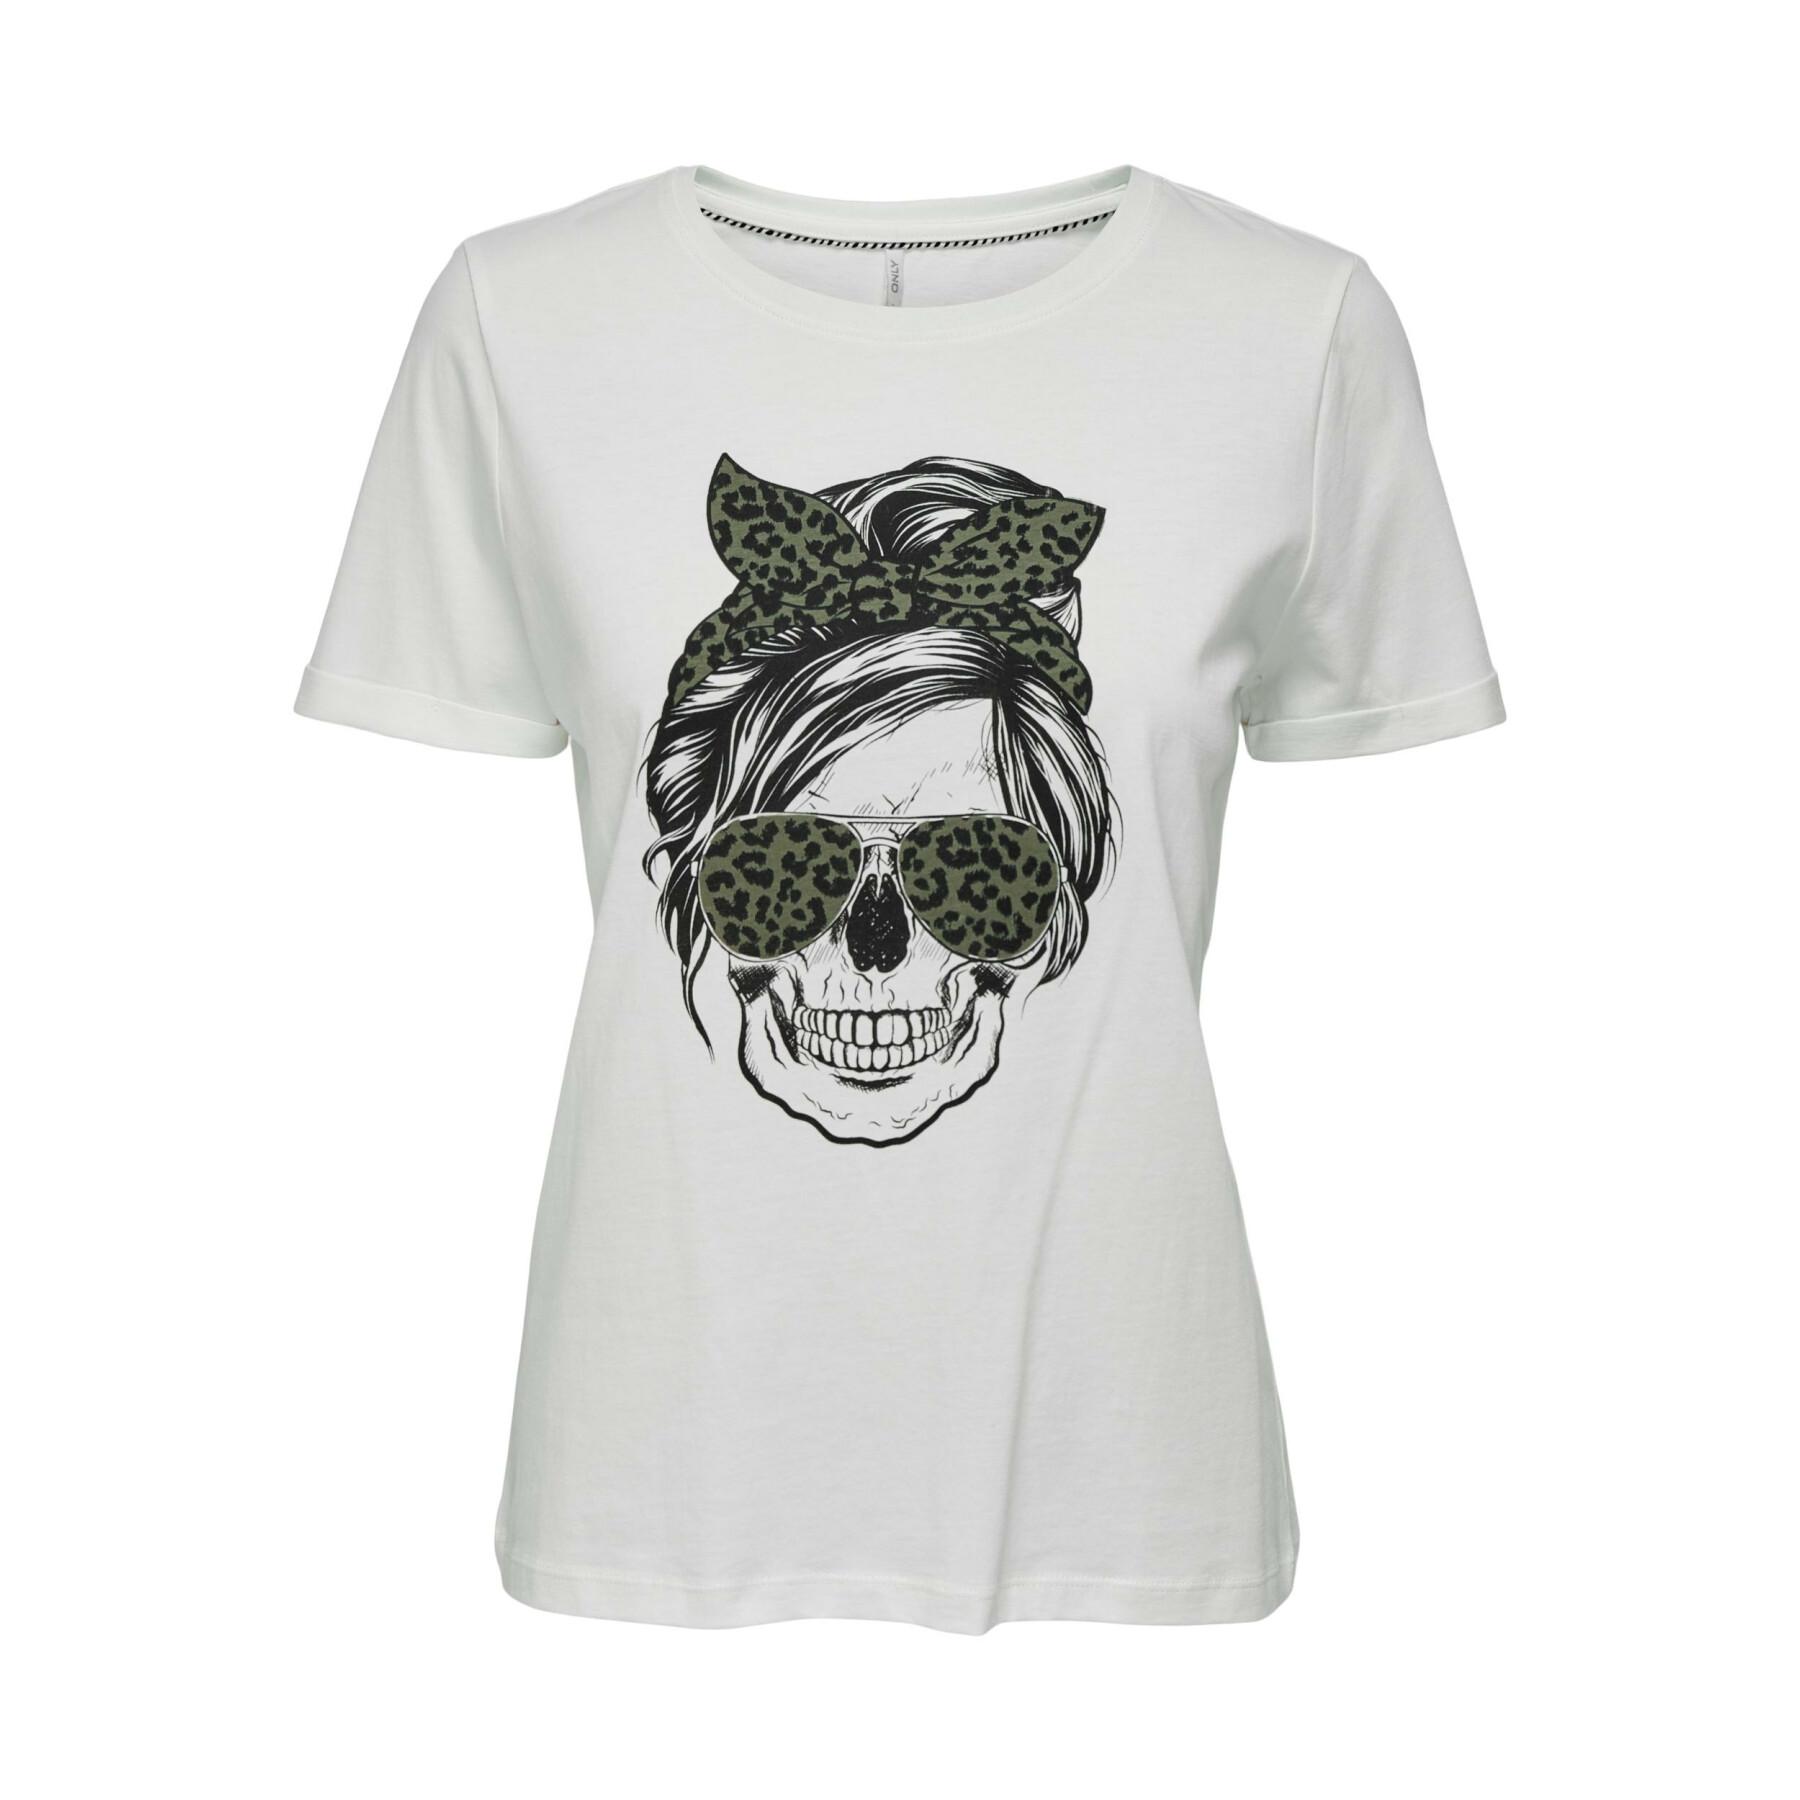 Camiseta de mujer Only Skull Top